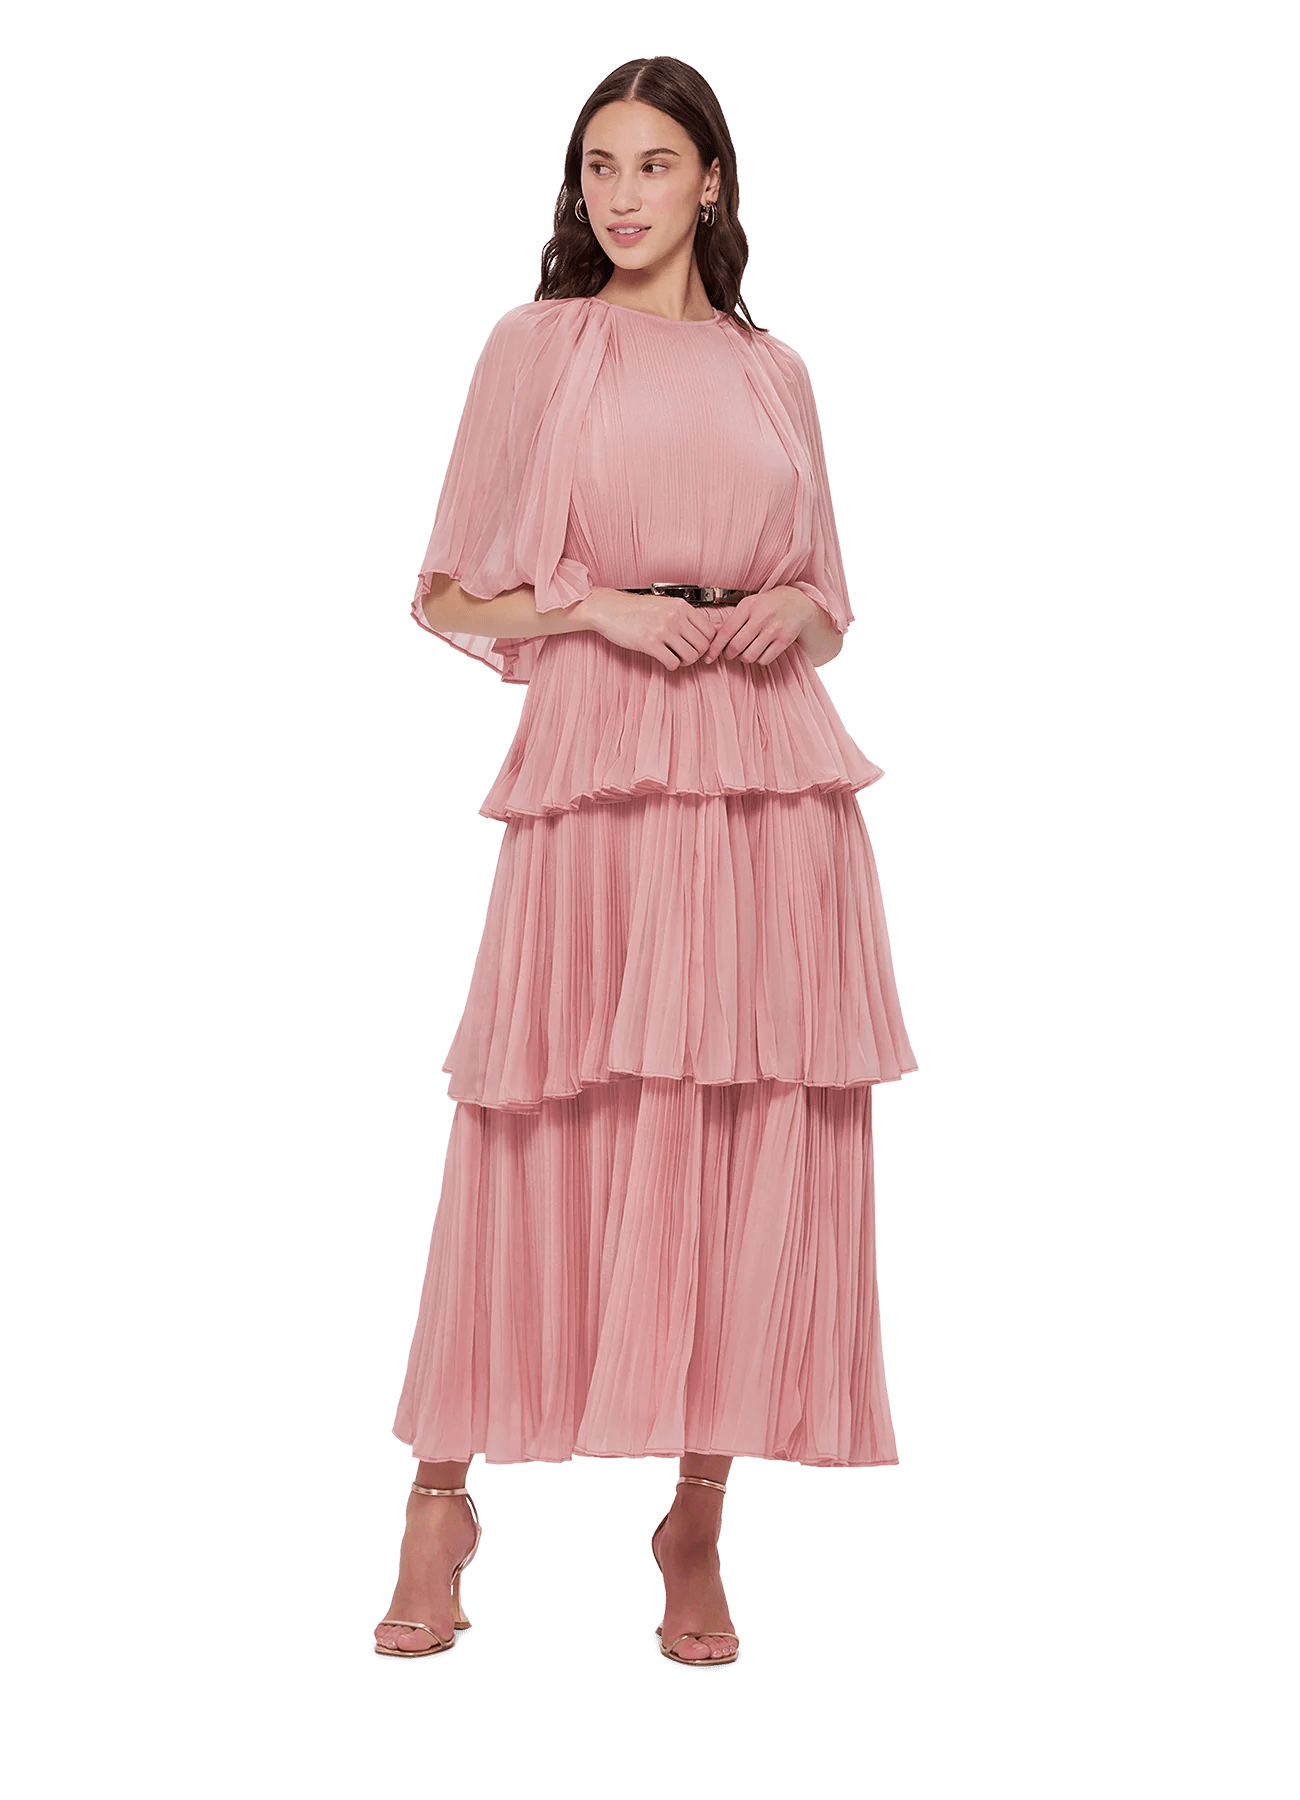 Leo Lin Adele Tiered Midi Dress - Dusty Pink - Pinkhill, Darwin boutique, Australian high end fashion, Darwin Fashion